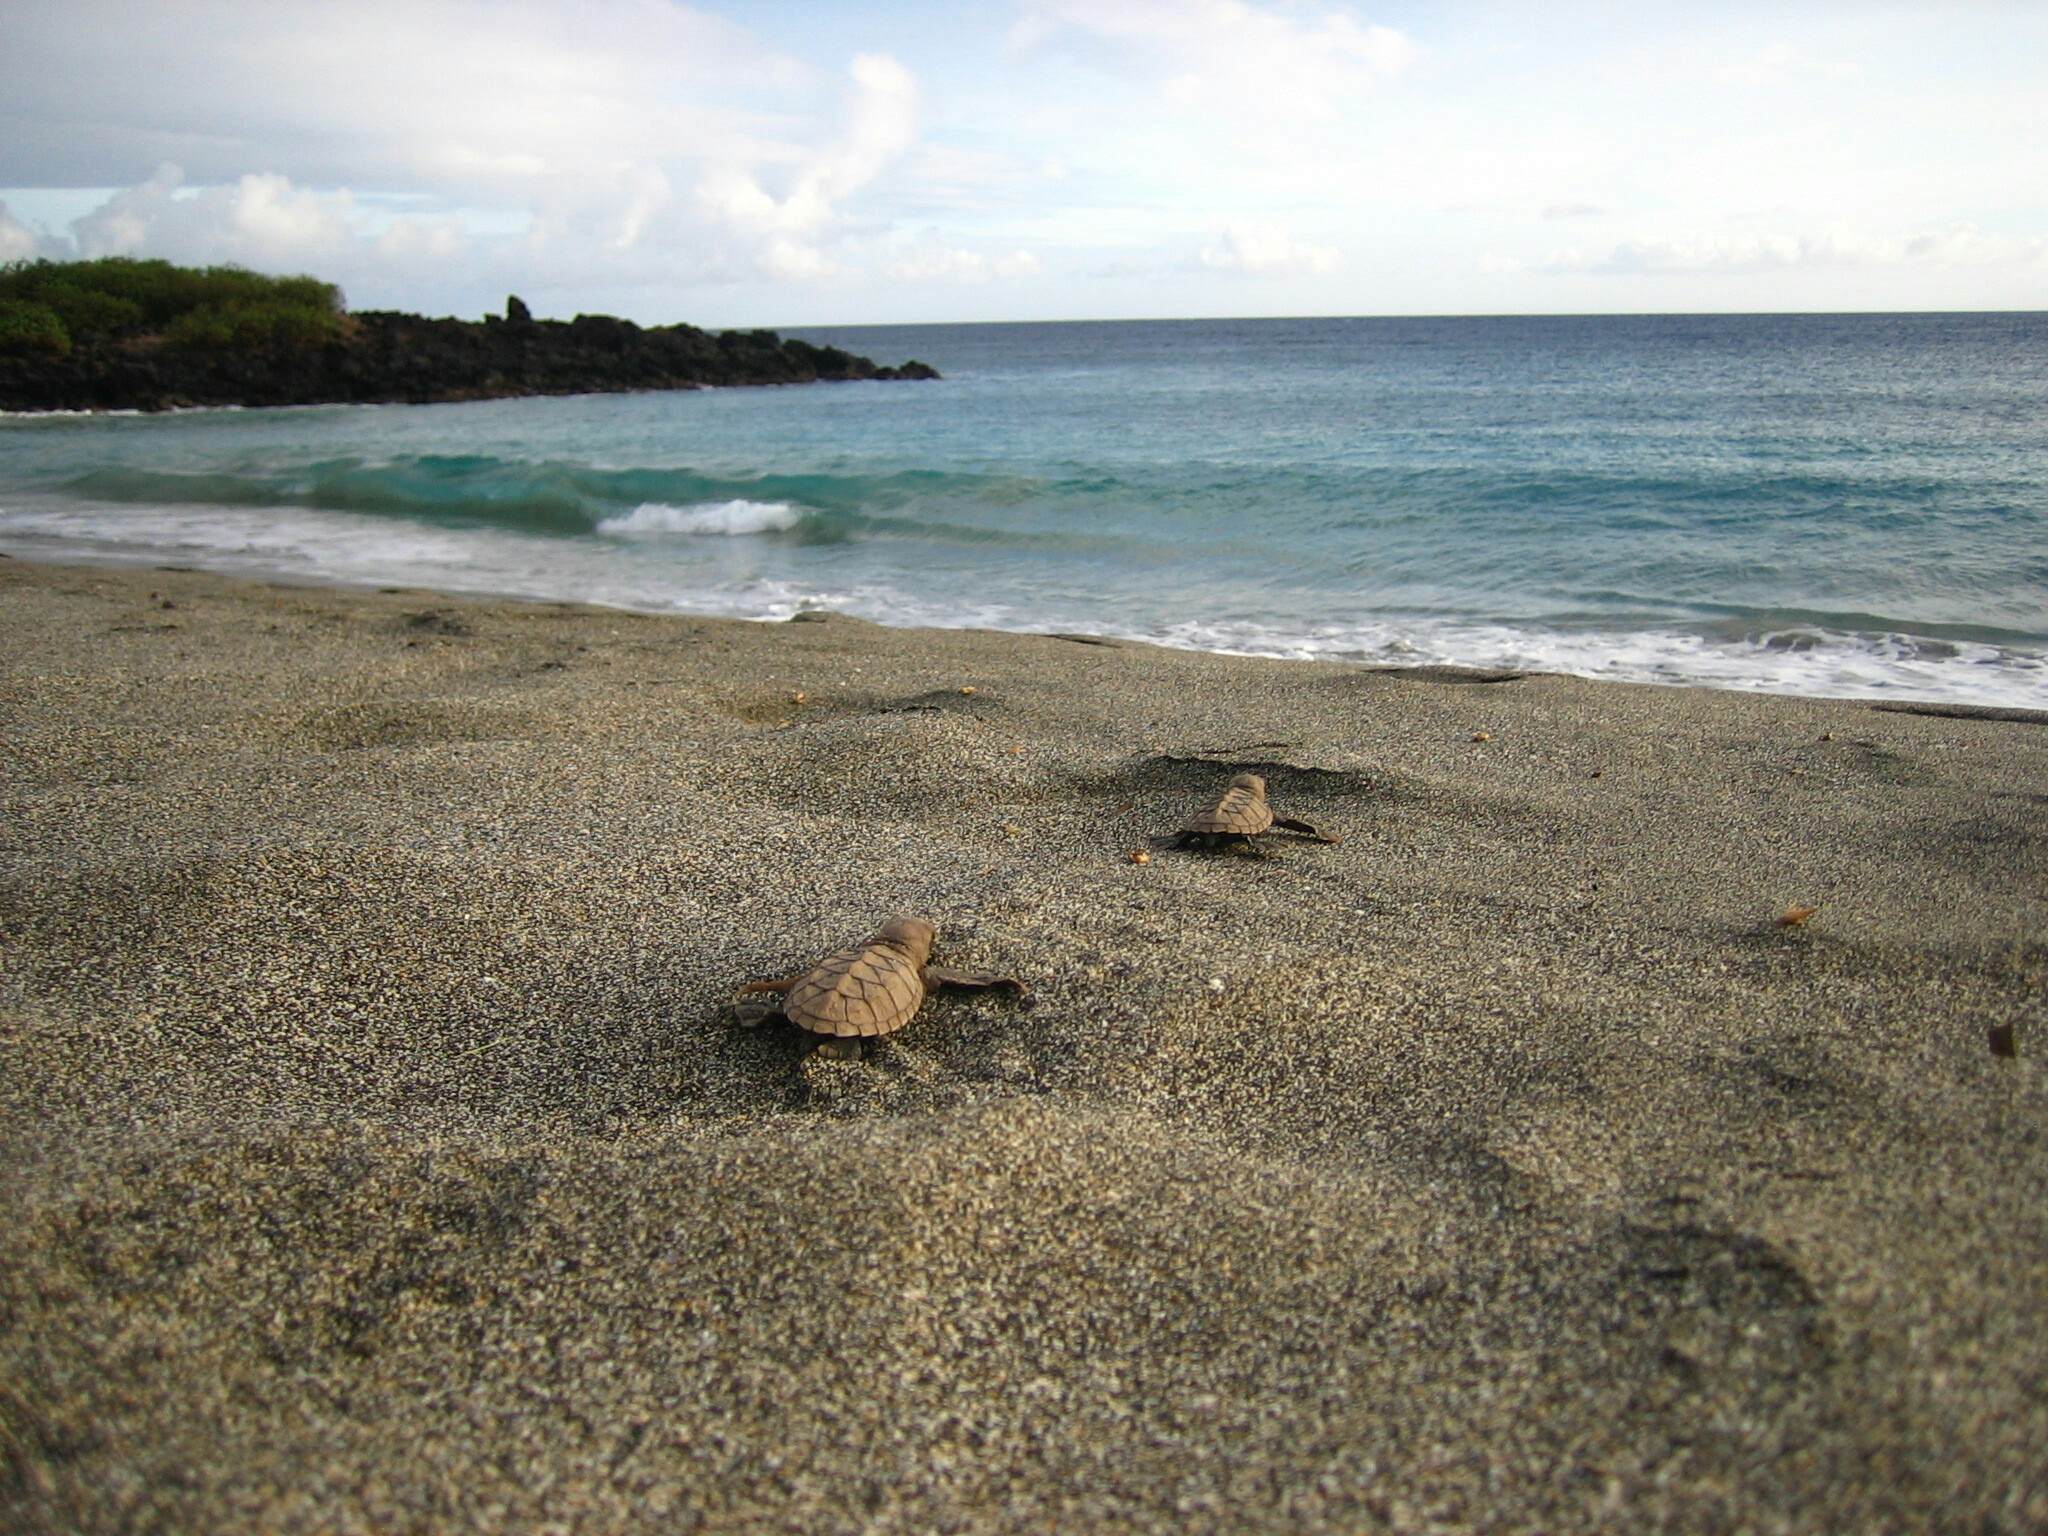 Stop stacking rocks Hippies : r/Hawaii